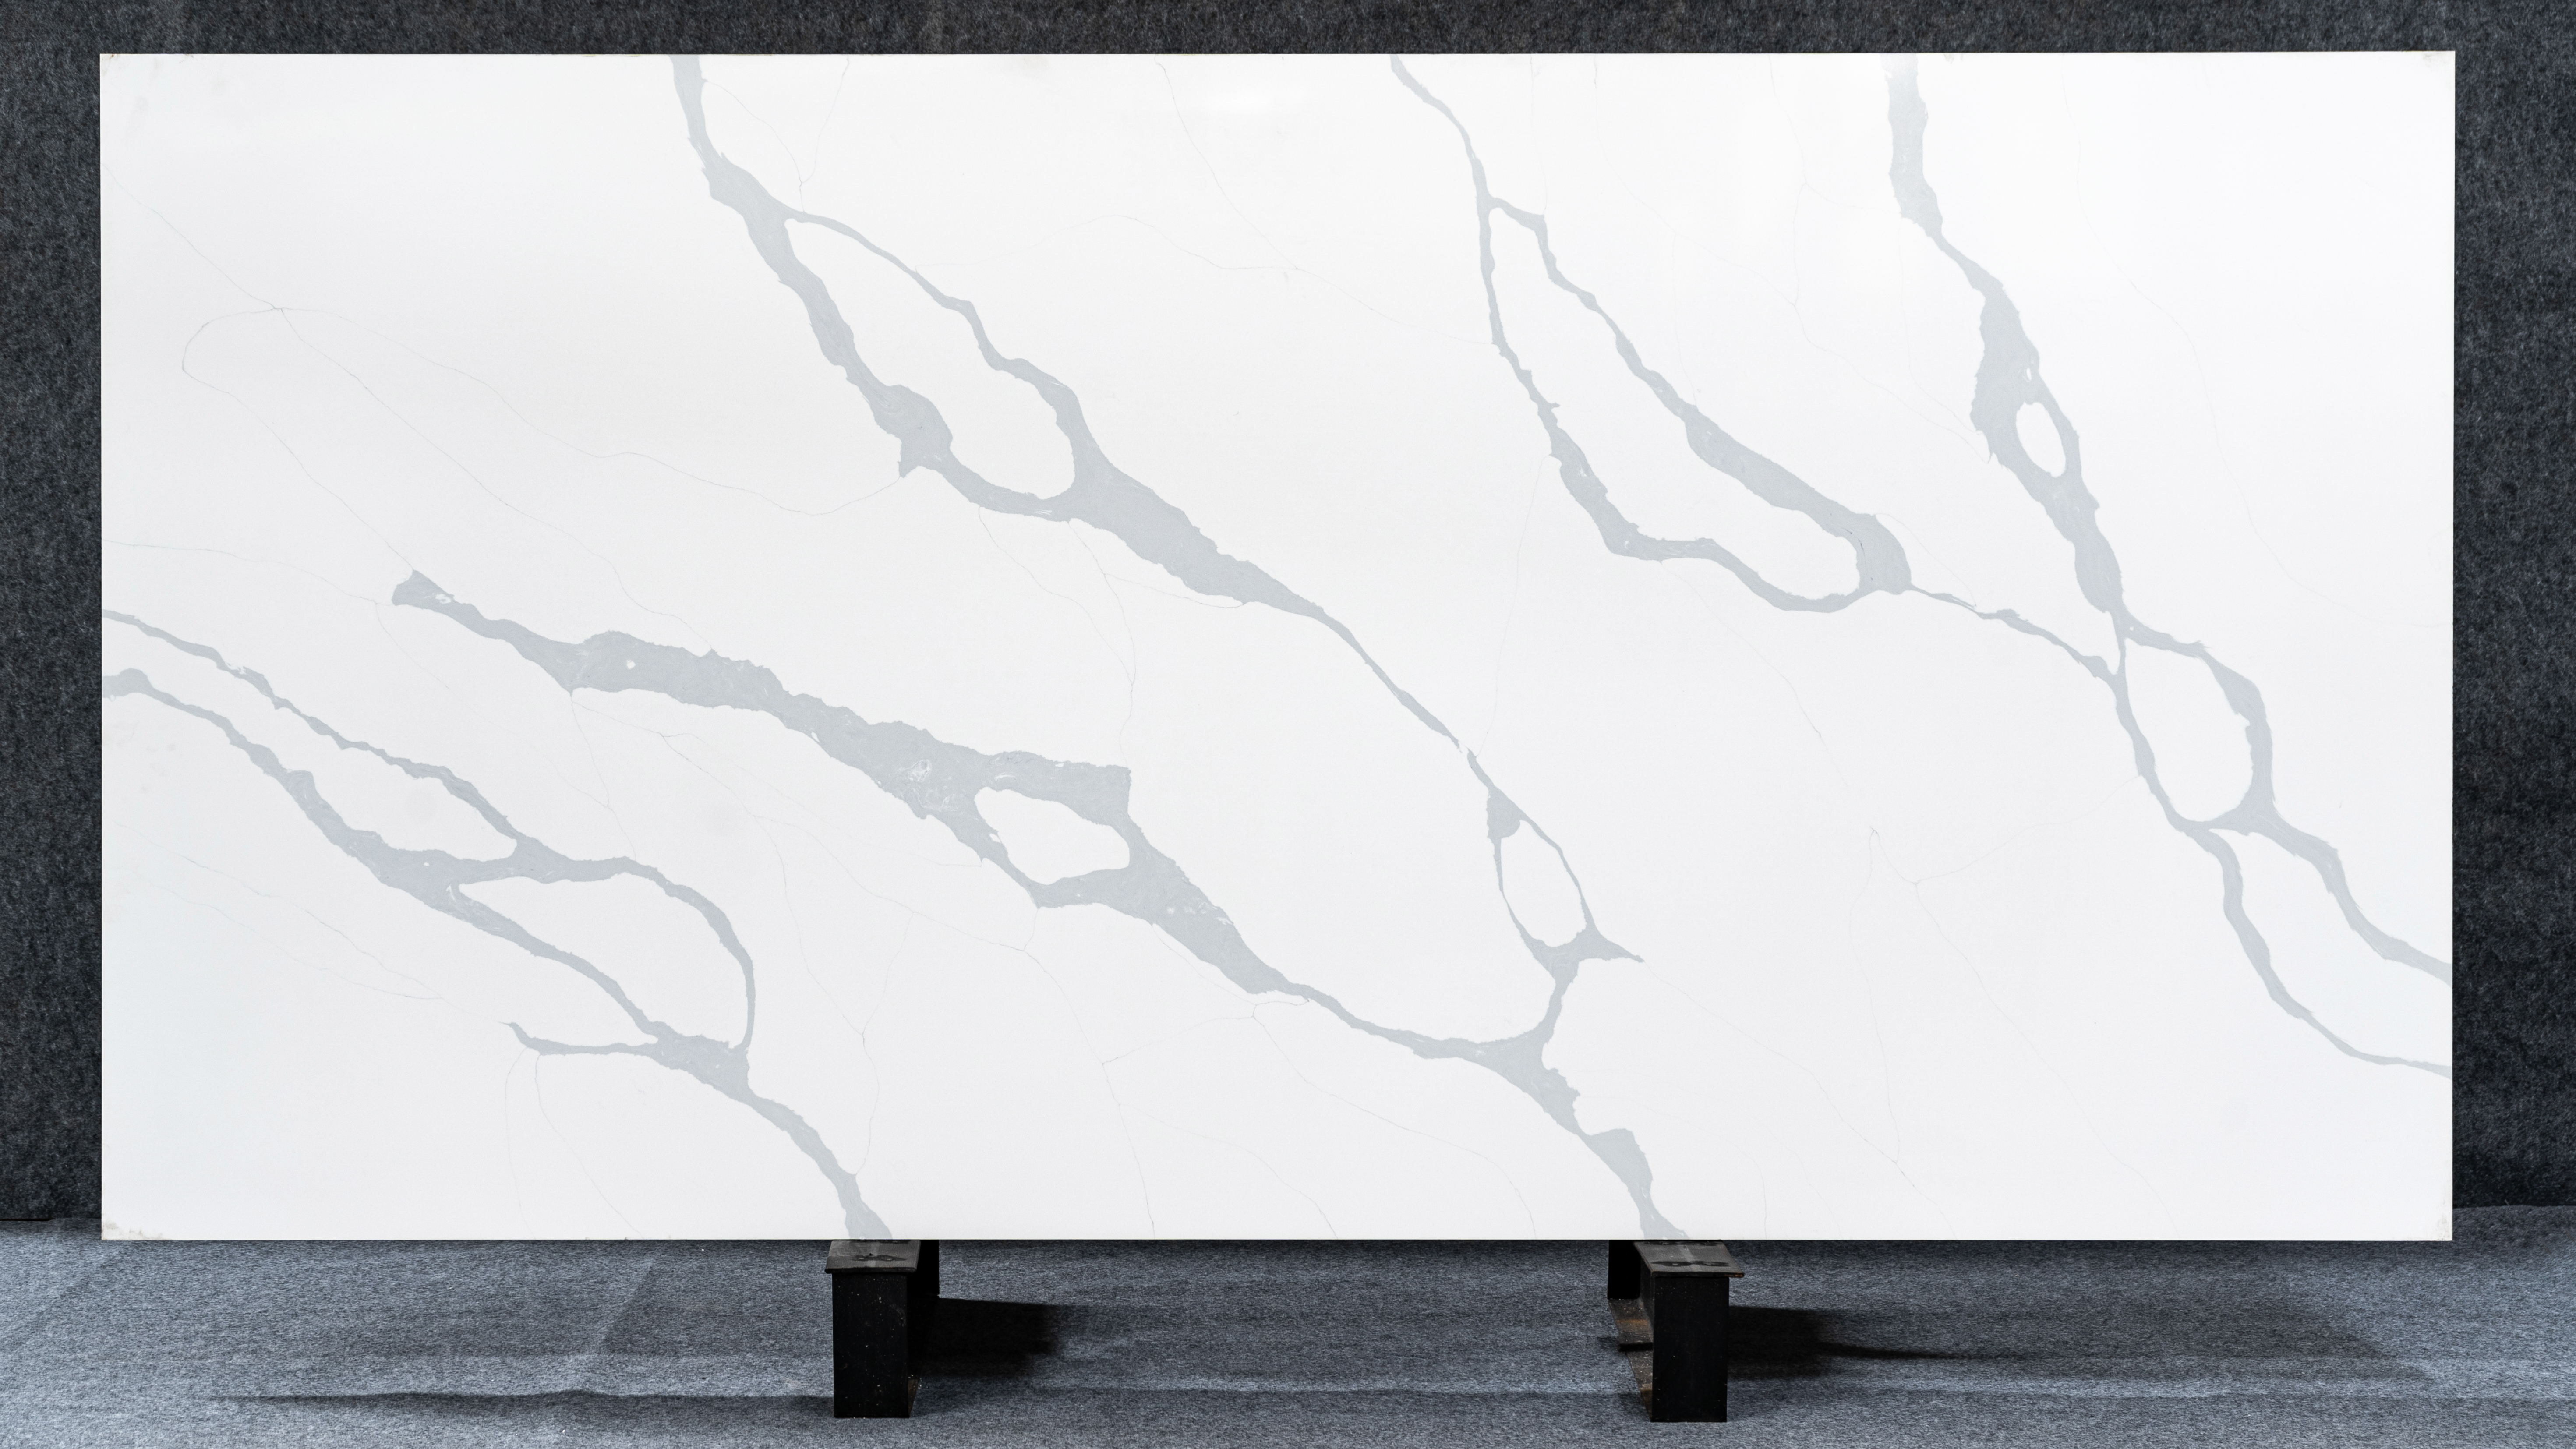 Popular polished quartz stone slabs for kitchen countertops